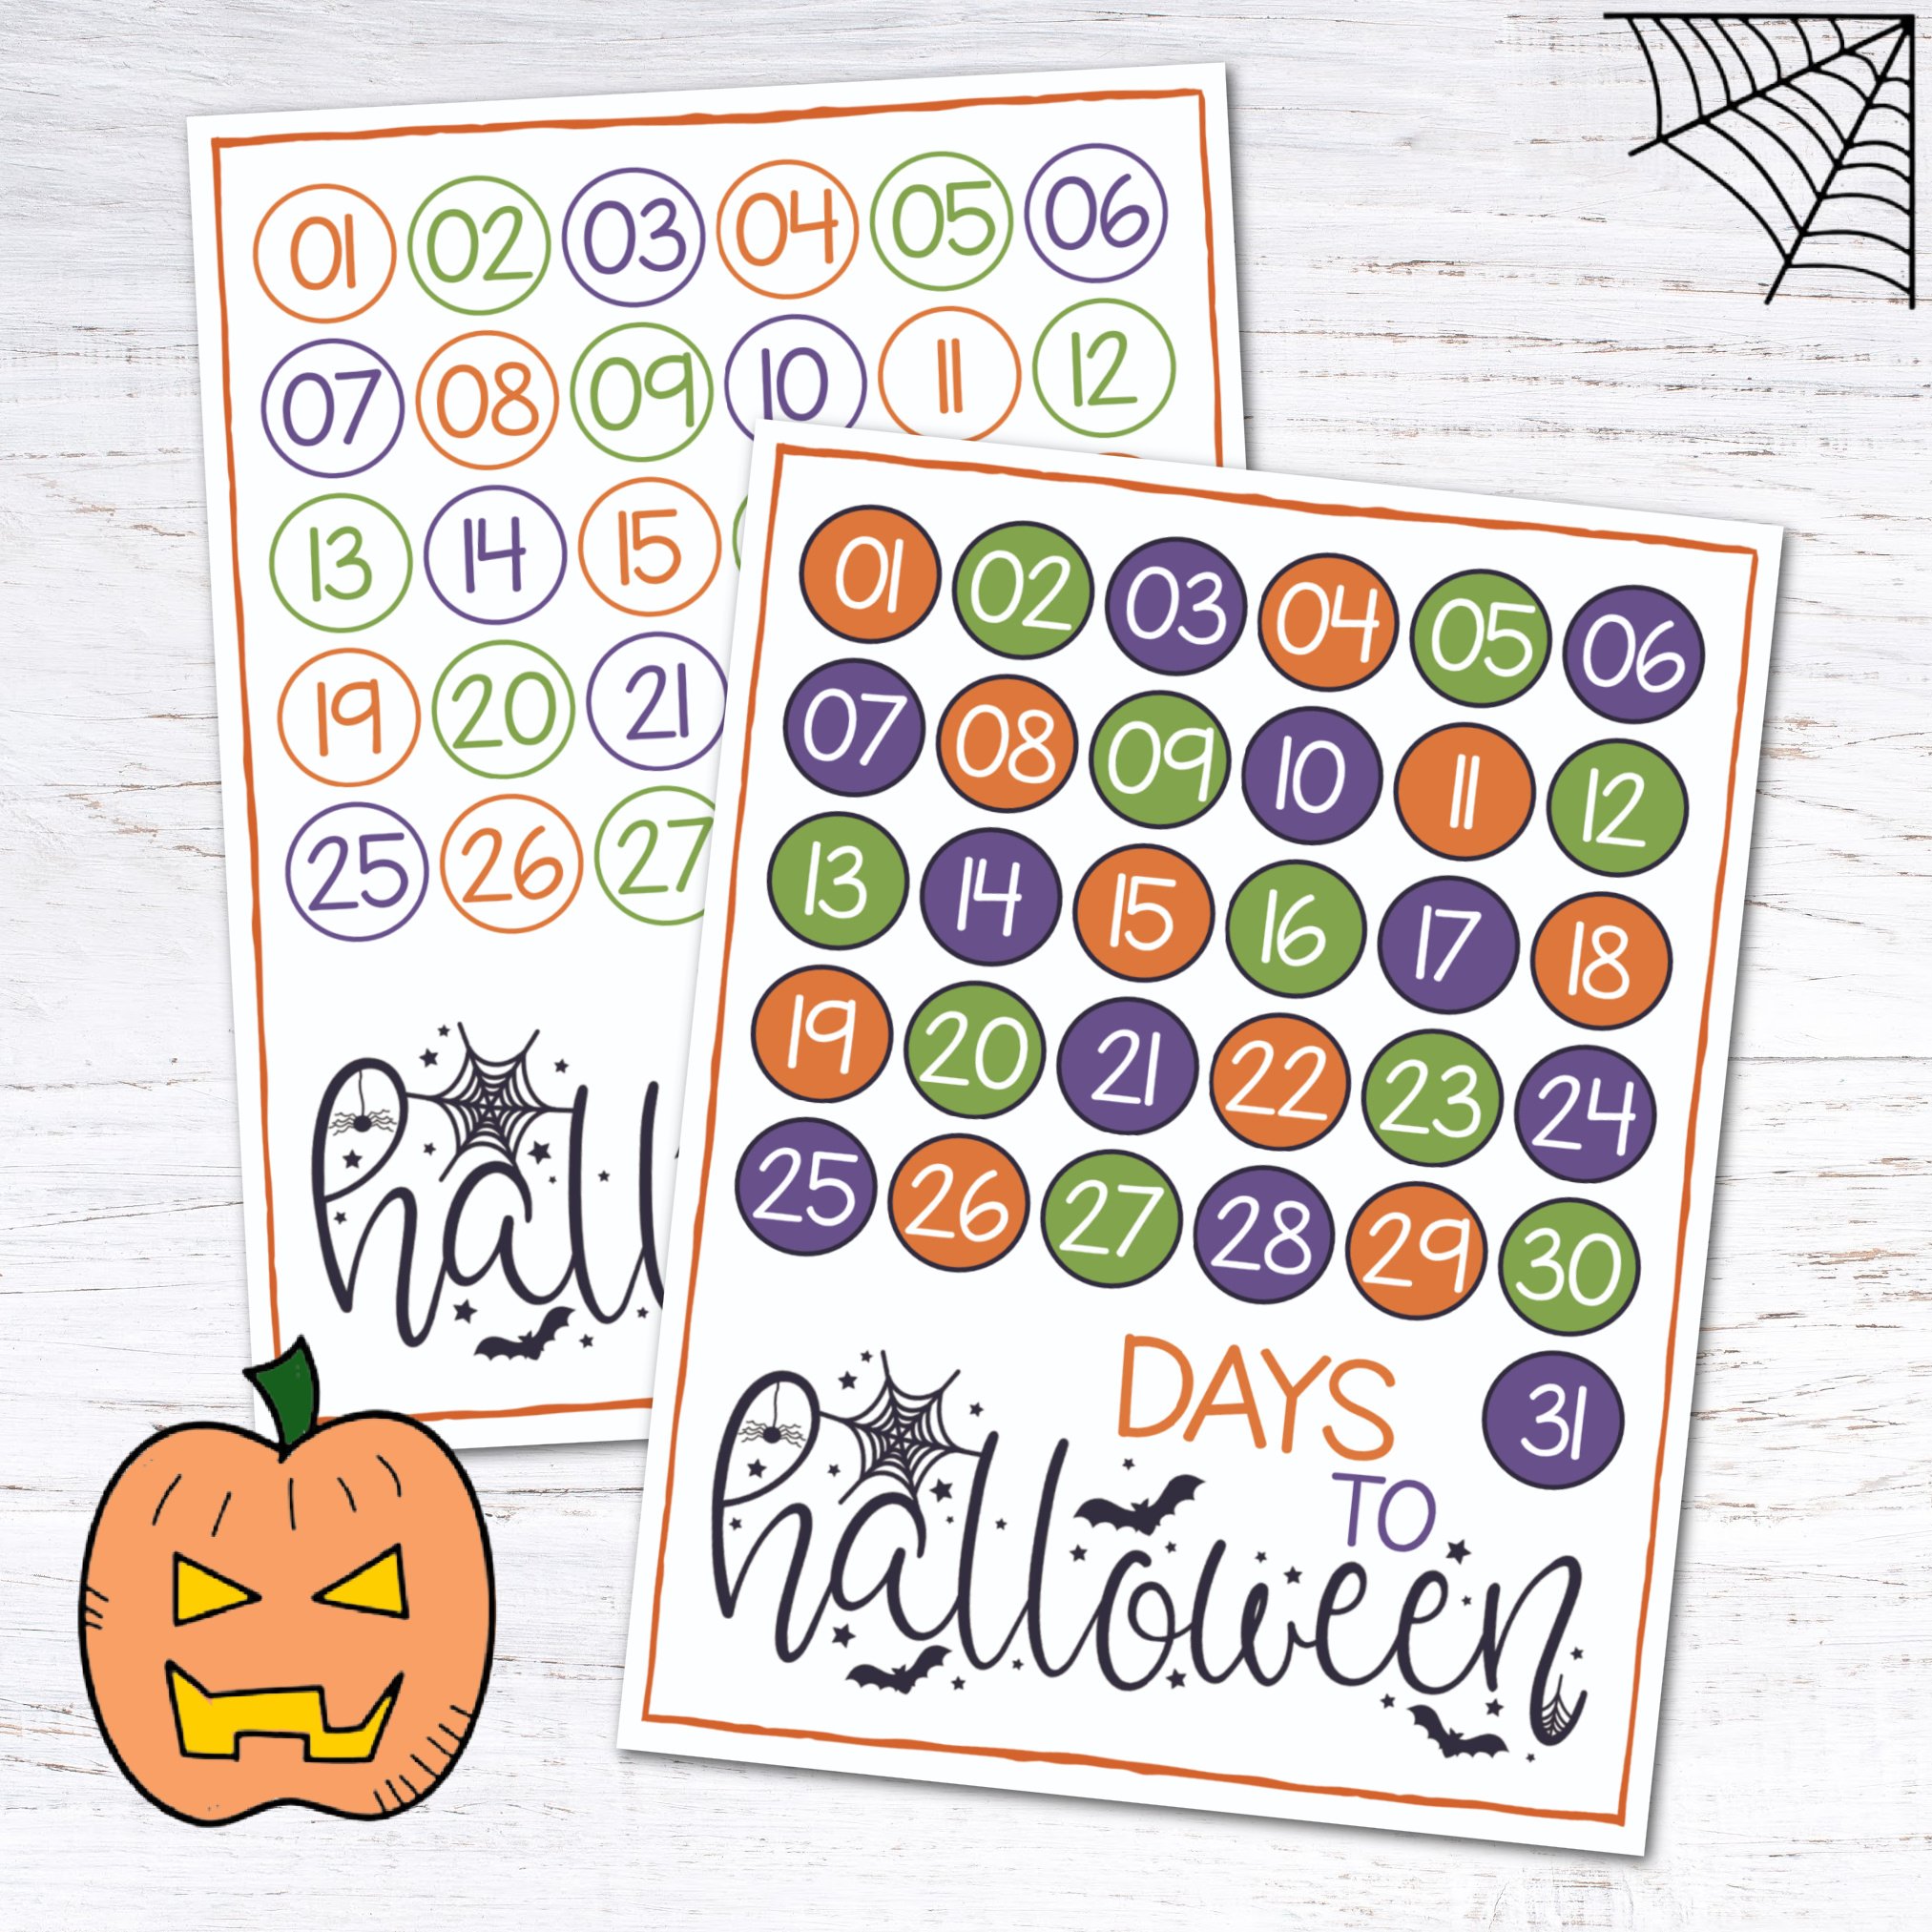 Halloween Countdown Calendar Free Printable